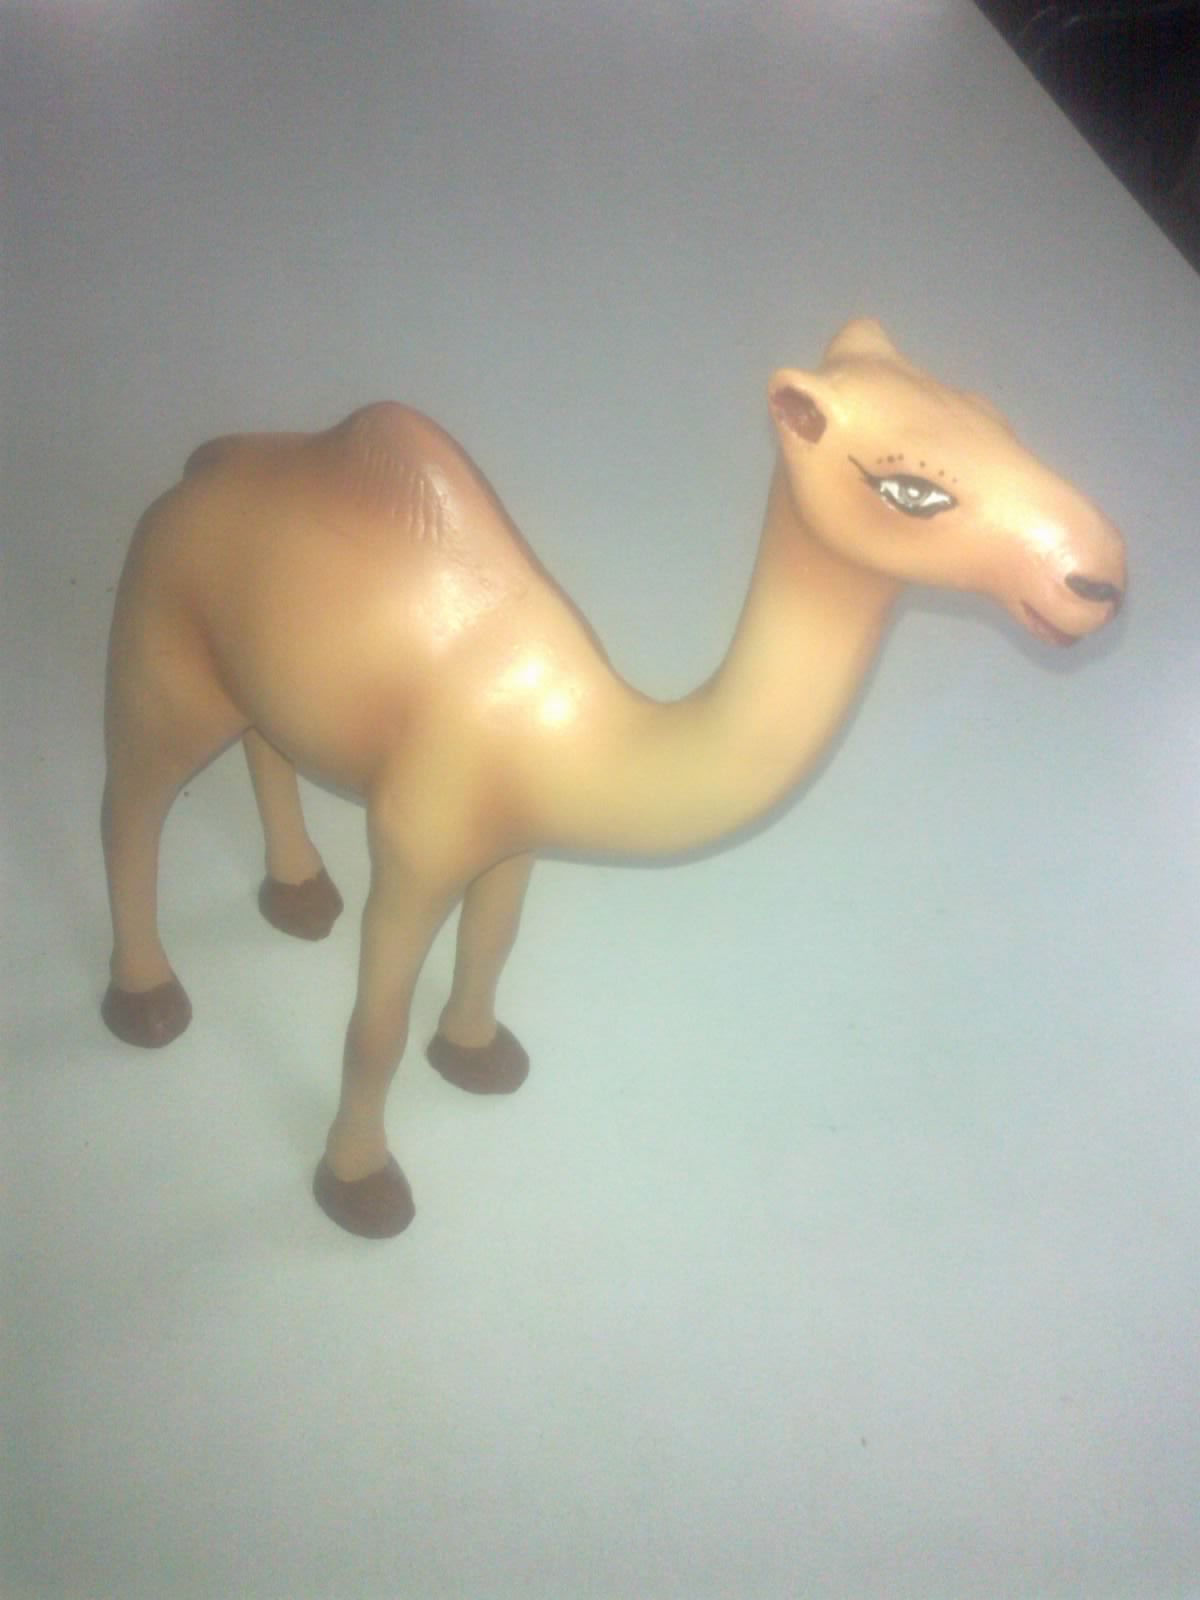 Camel Model